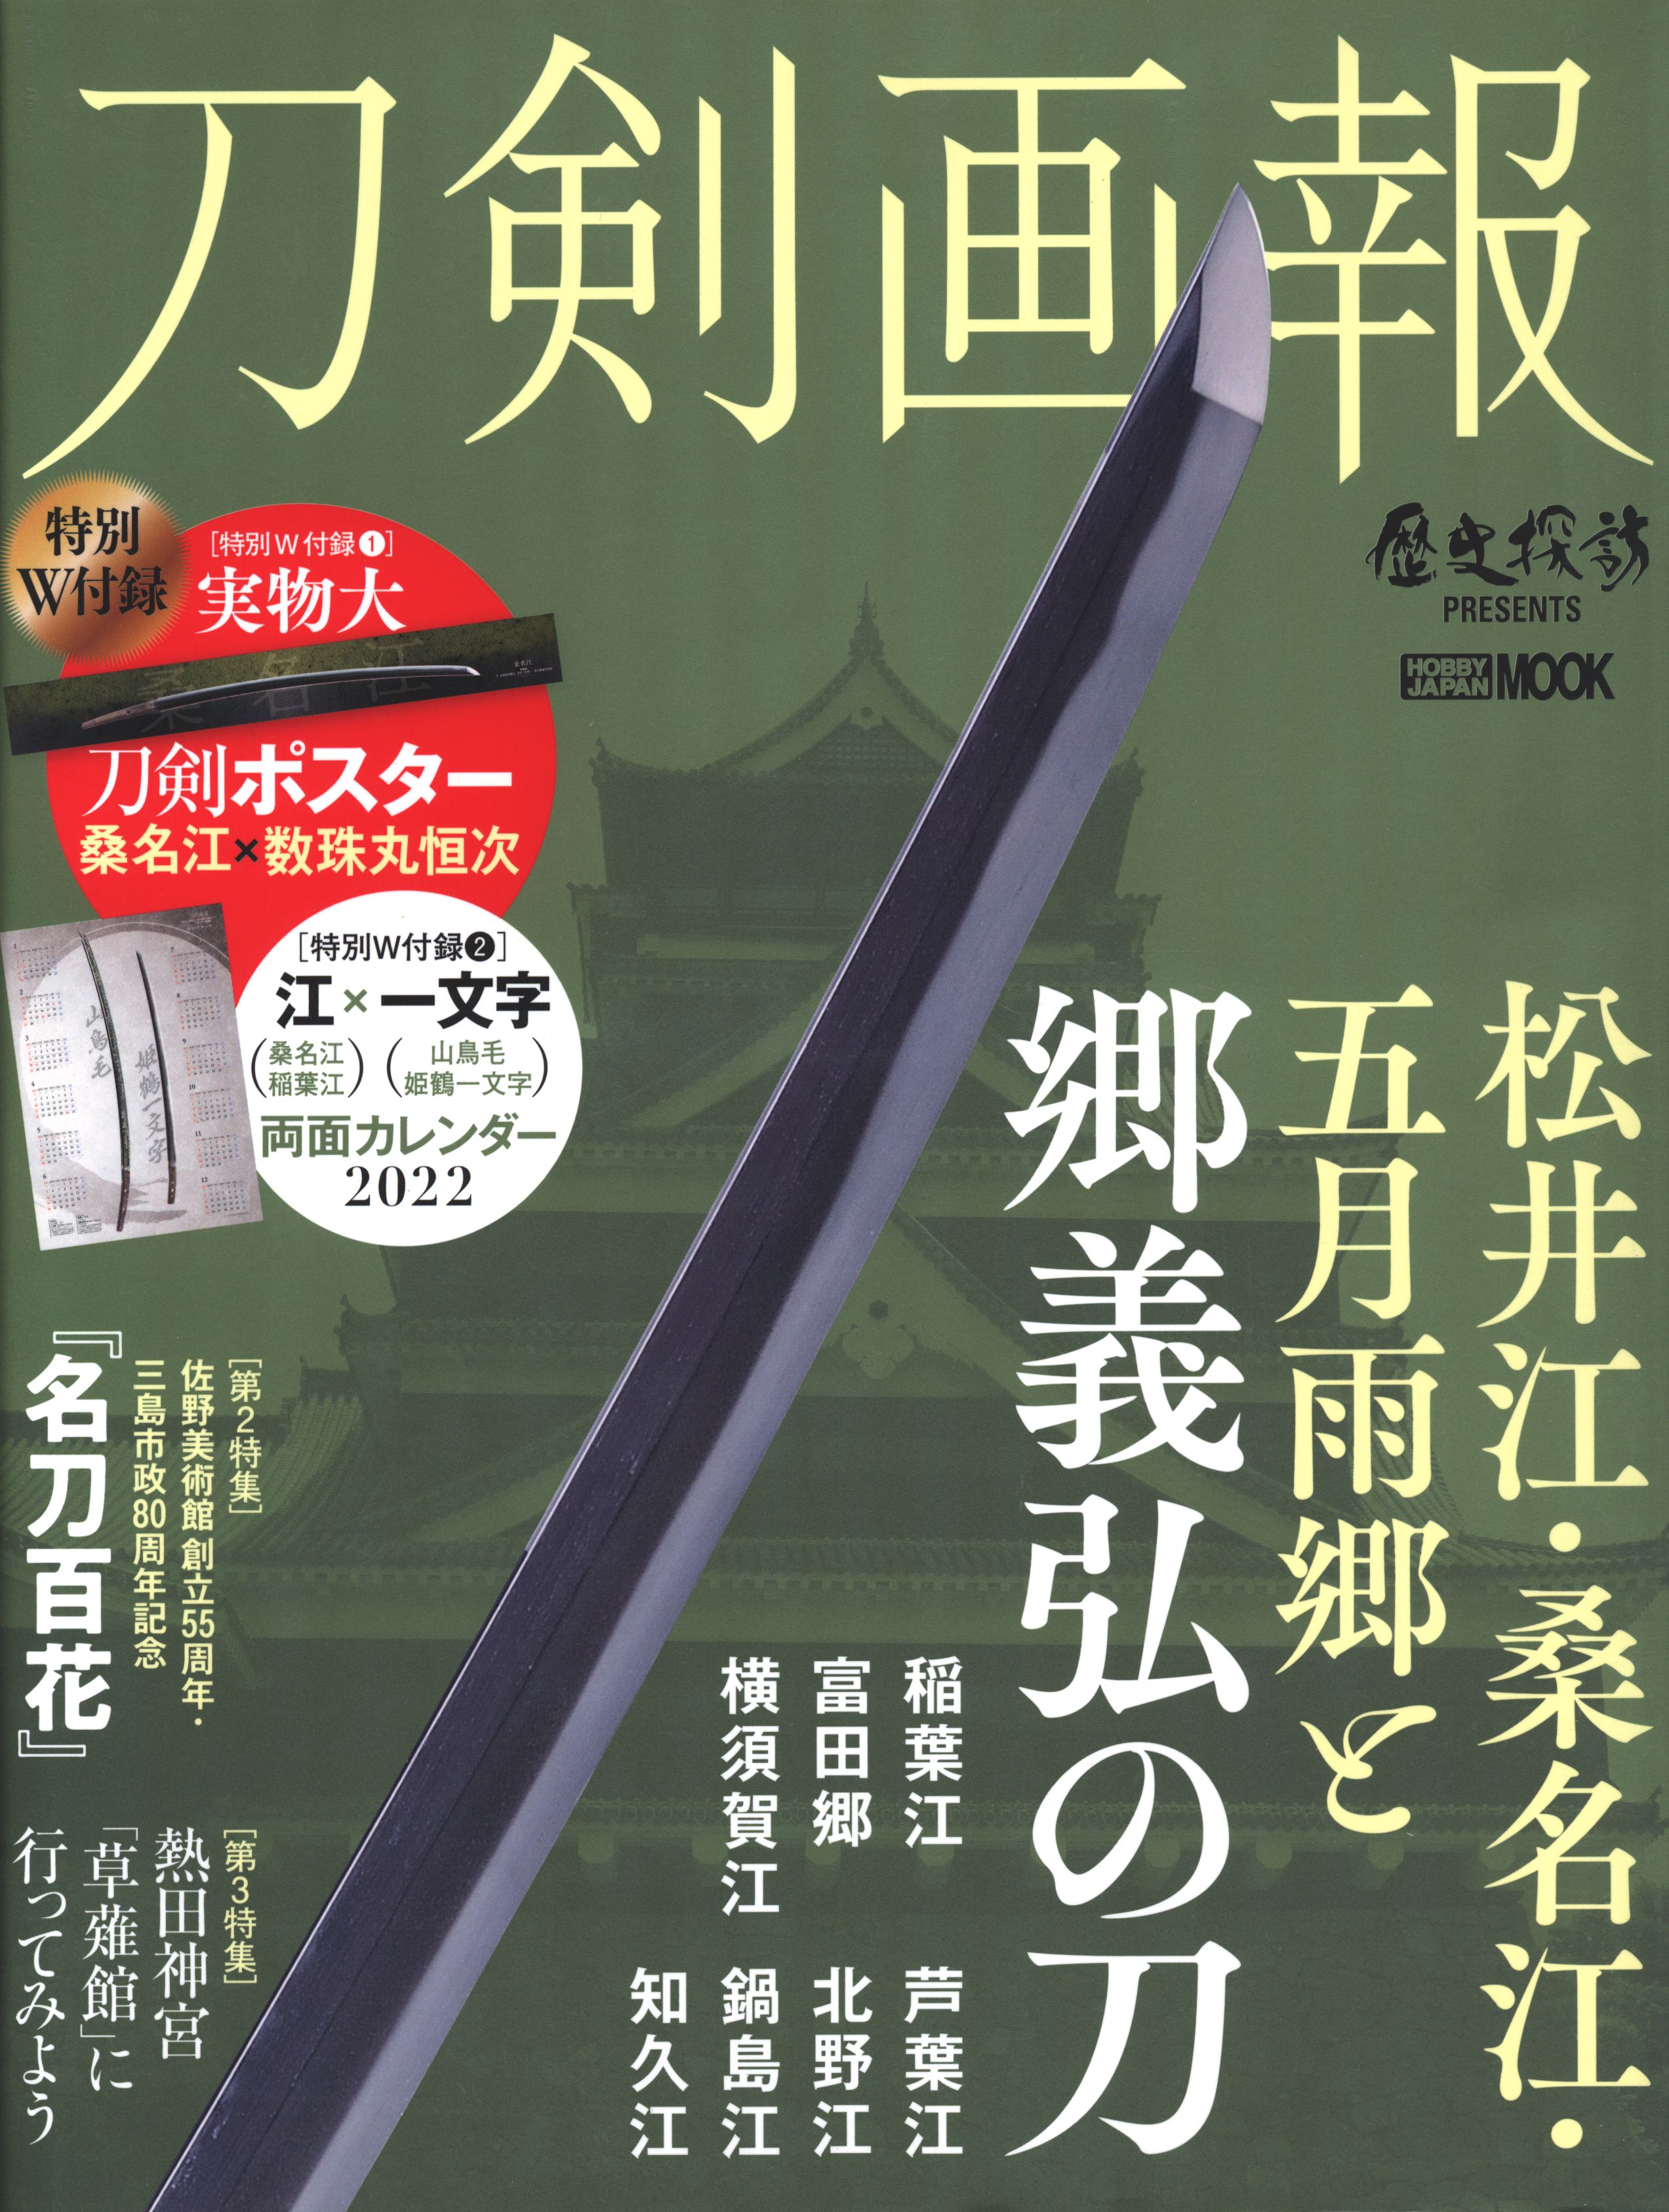 Yoshihiro's　appendix　Satsuki　Sword　and　Matsui　Kuwana　Ugou　River,　在线商店　pictorial　swords　with　River,　Go　MANDARAKE